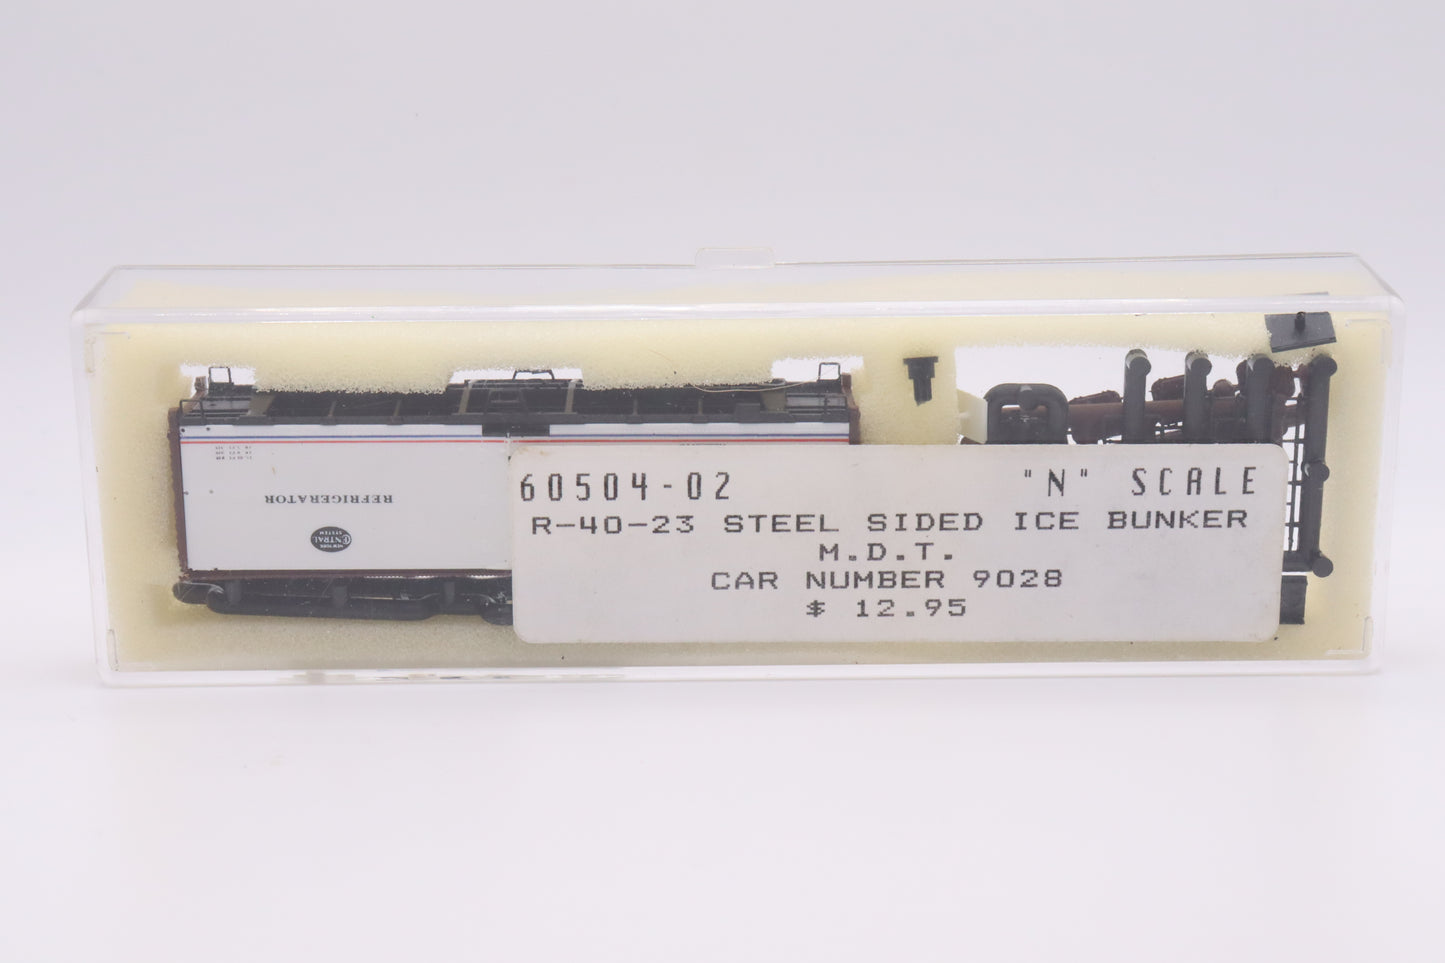 IMR-60504-02 - R-40-23 Steel Sided Ice Bunker Reefer Car Kit - New York Central - MDT-9028